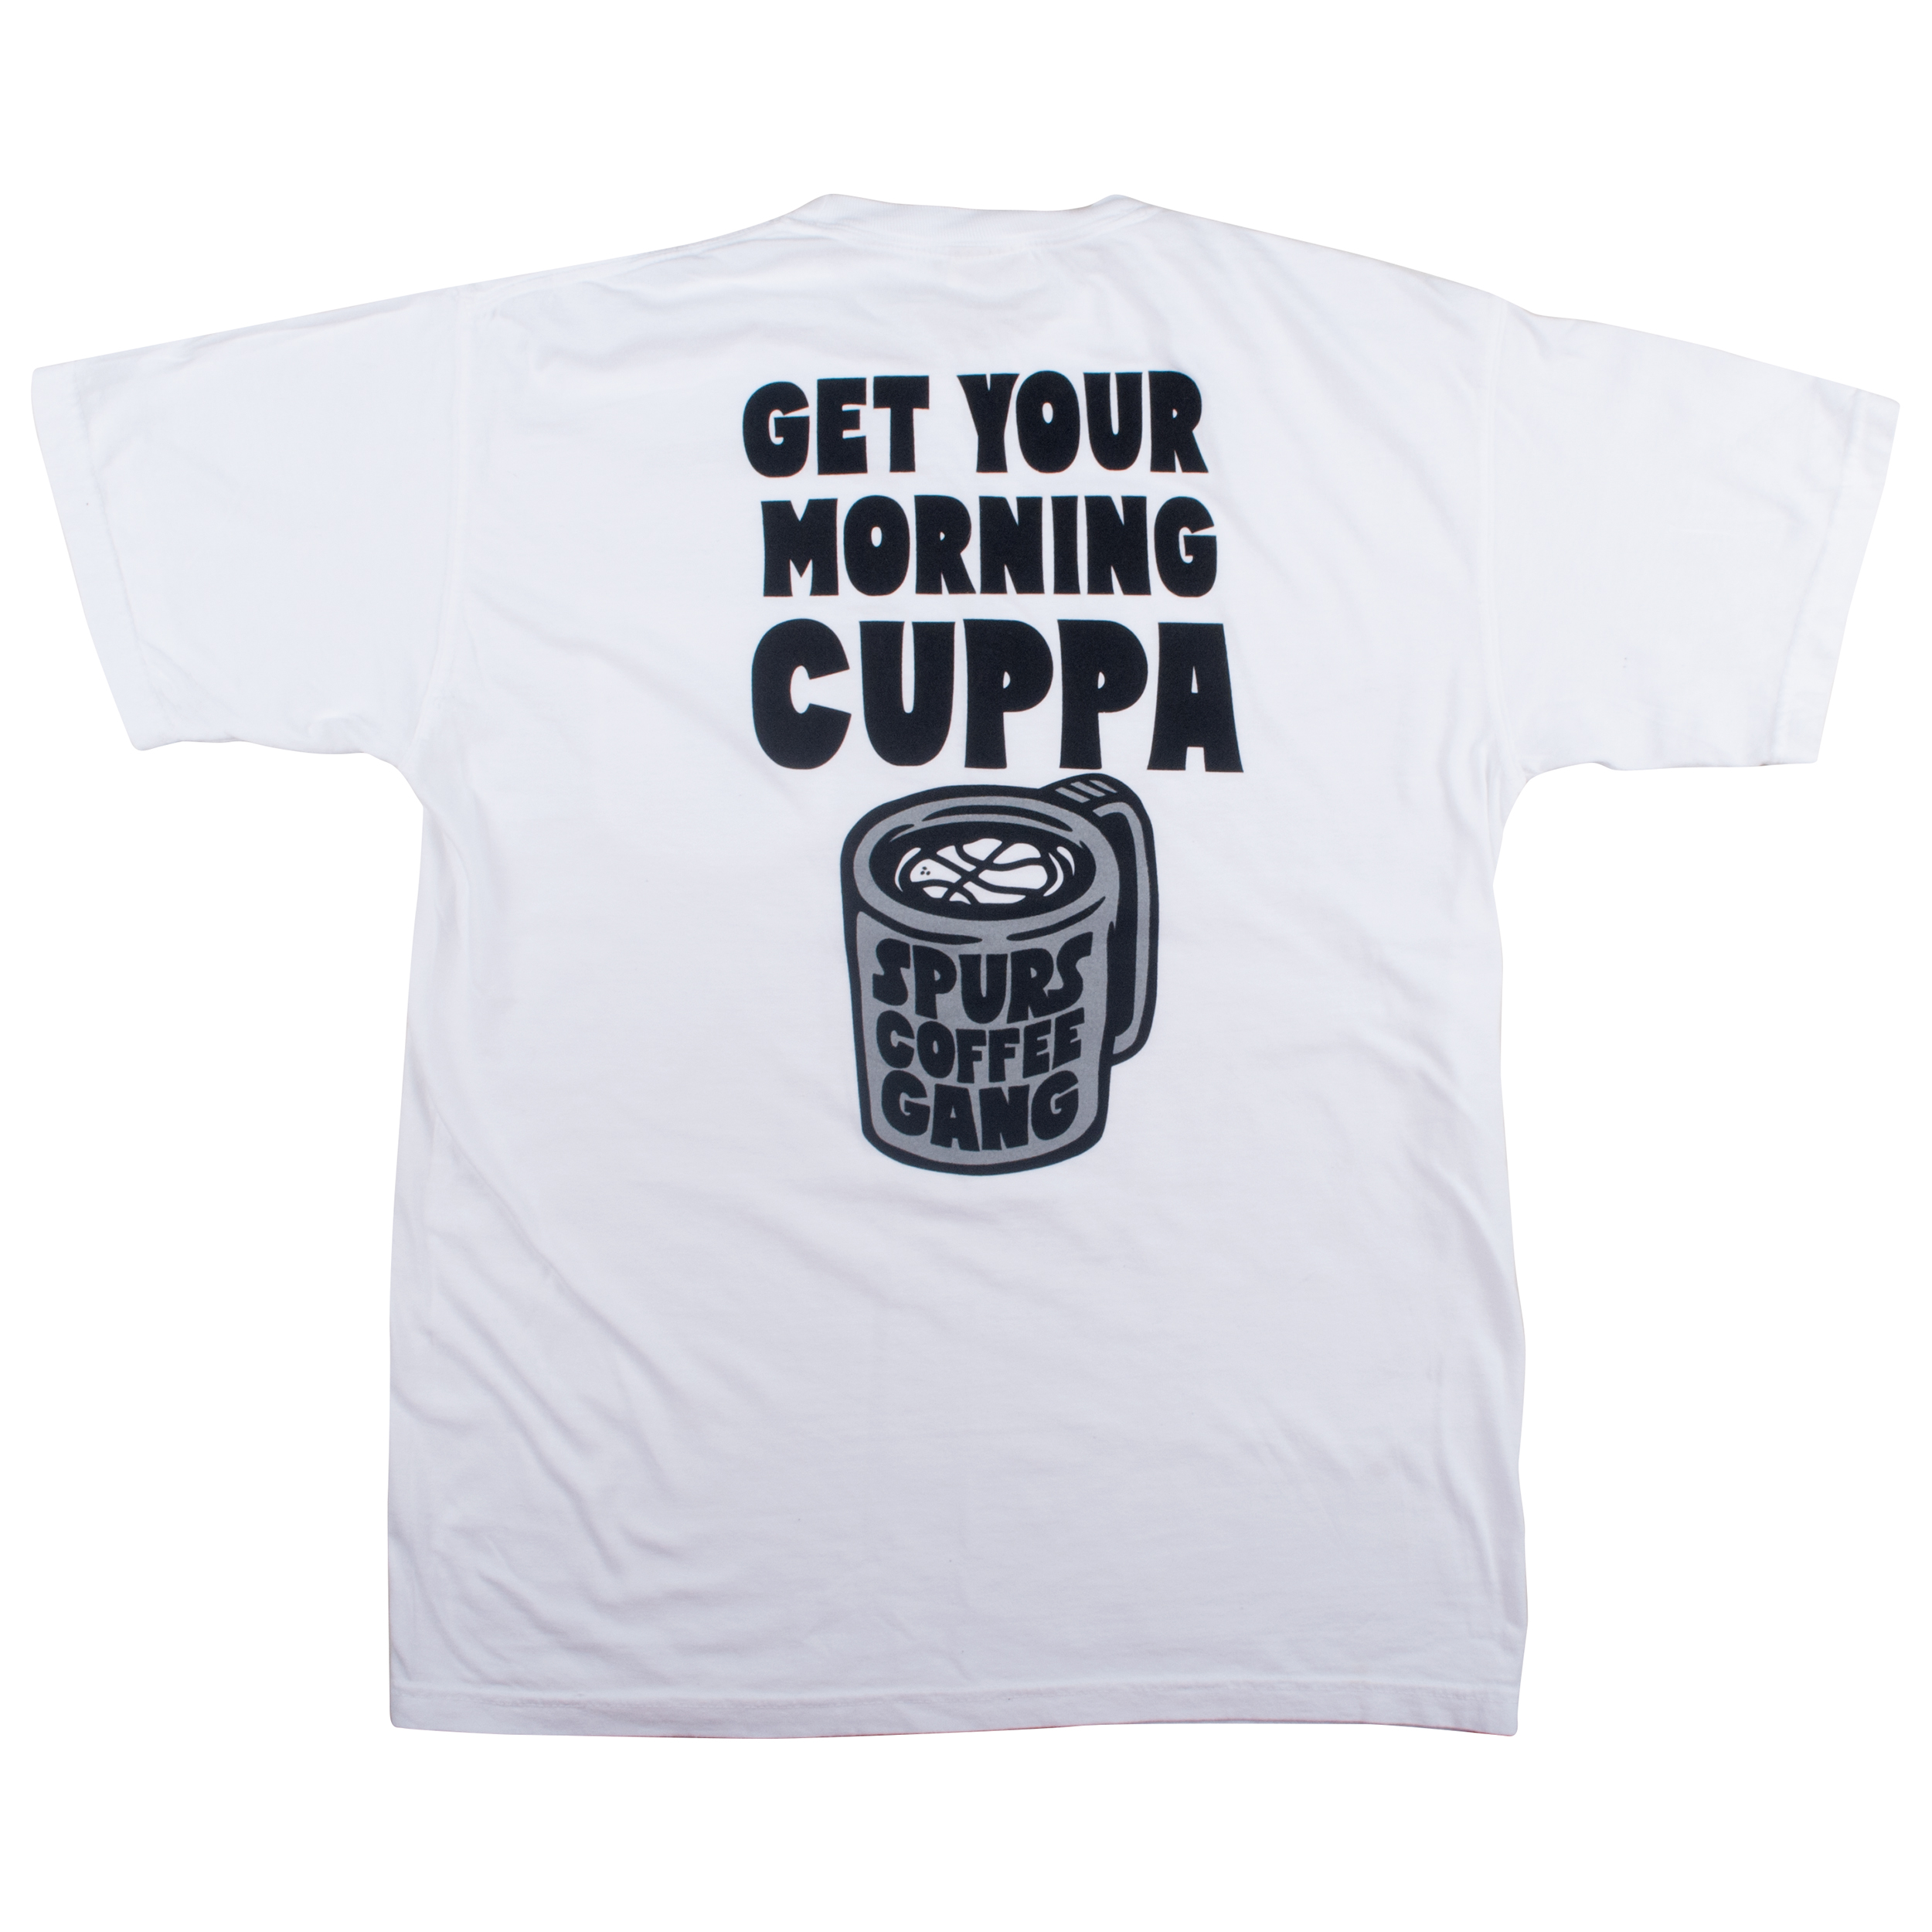 Spurs legend Manu Ginobili pushes Coffee Gang merchandise